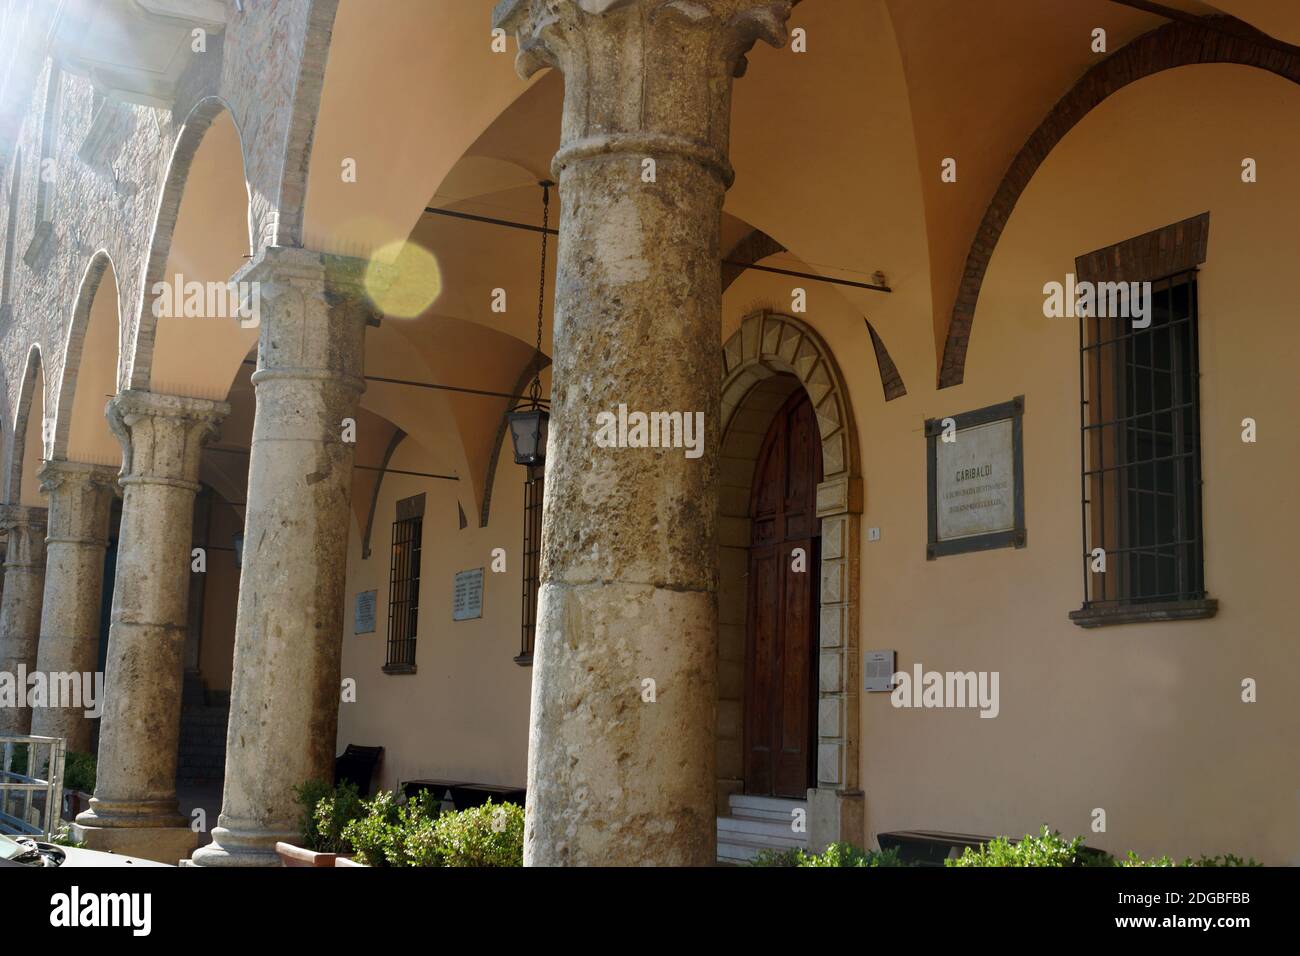 Palacio Ordelaffi. La catedral en la plaza principal de la ciudad de Bertinoro. Bertinoro, Forlì-Cesena, Emilia-Romaña, Italia Foto de stock